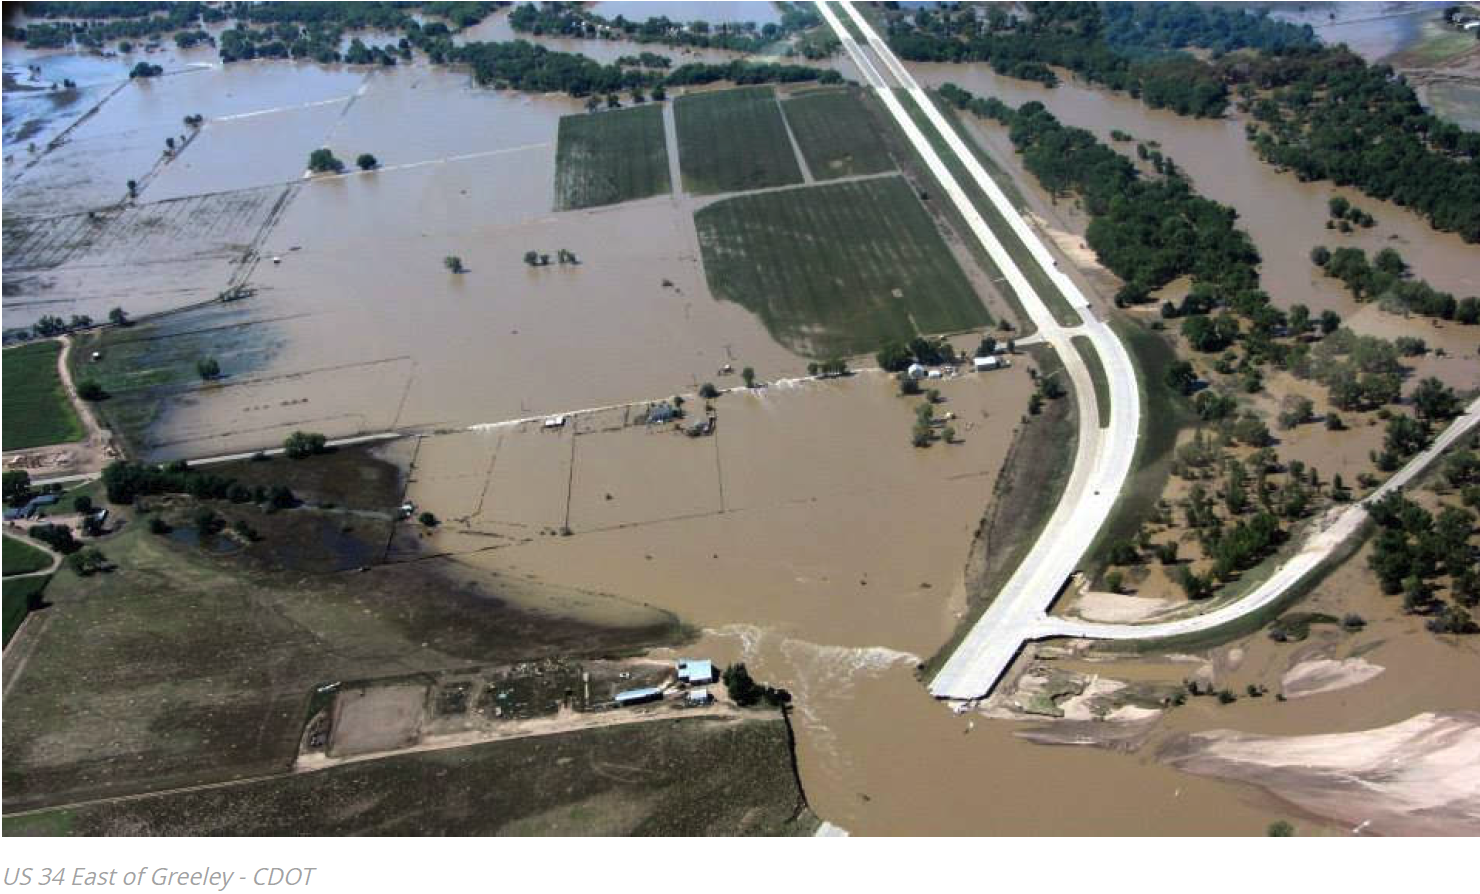 2013 Historic Flood Event